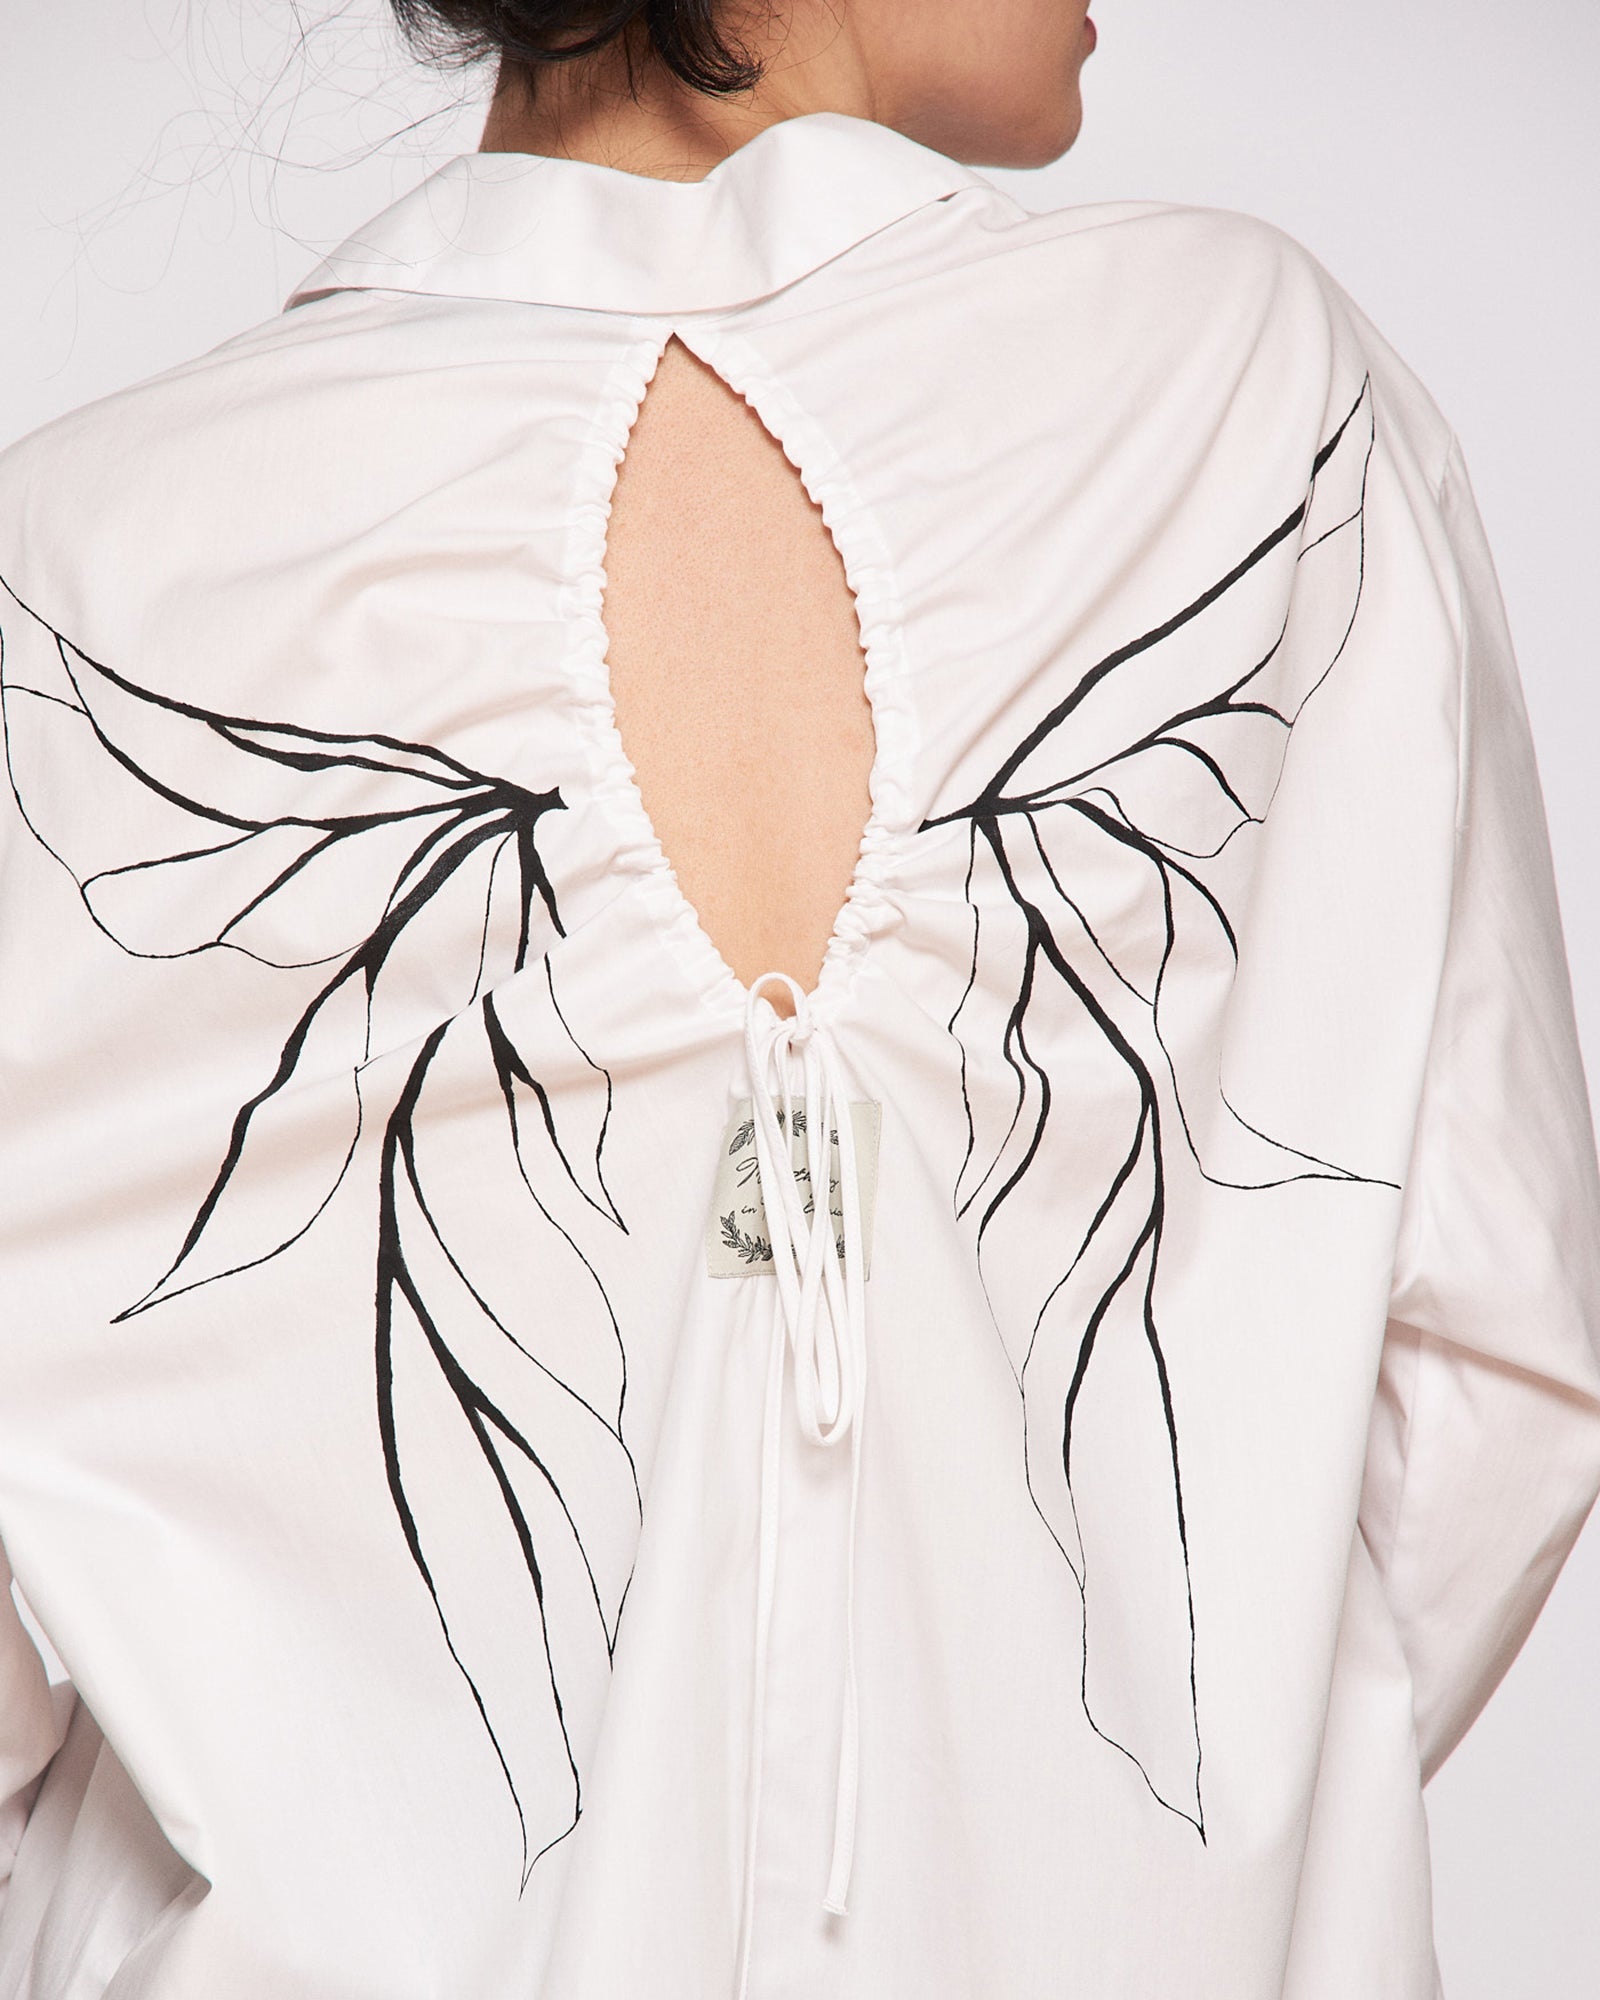 Women's open back shirt "Monochrome Mariposa"